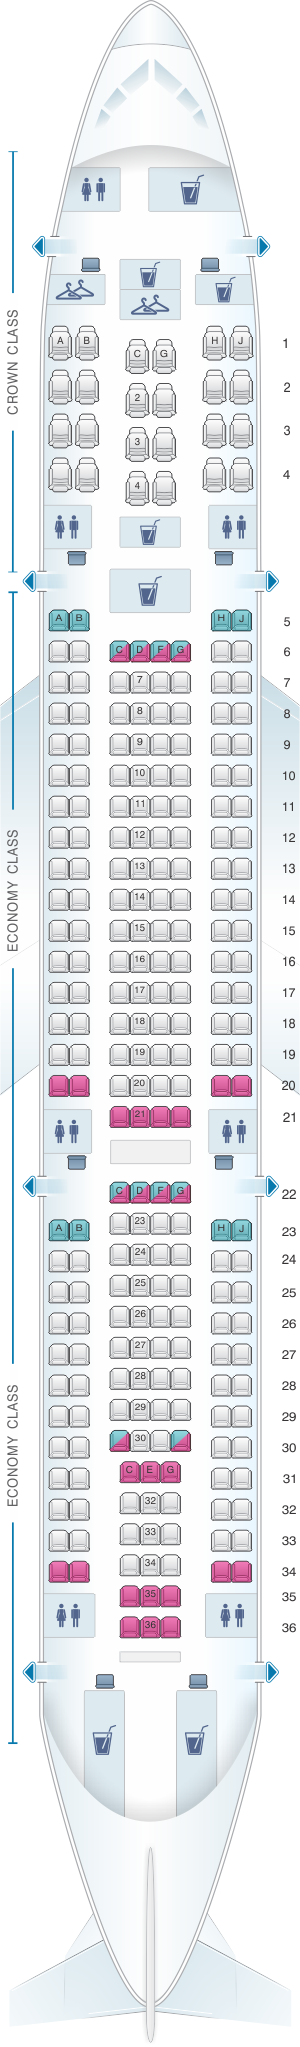 Seat map for Royal Jordanian Airbus A340 200